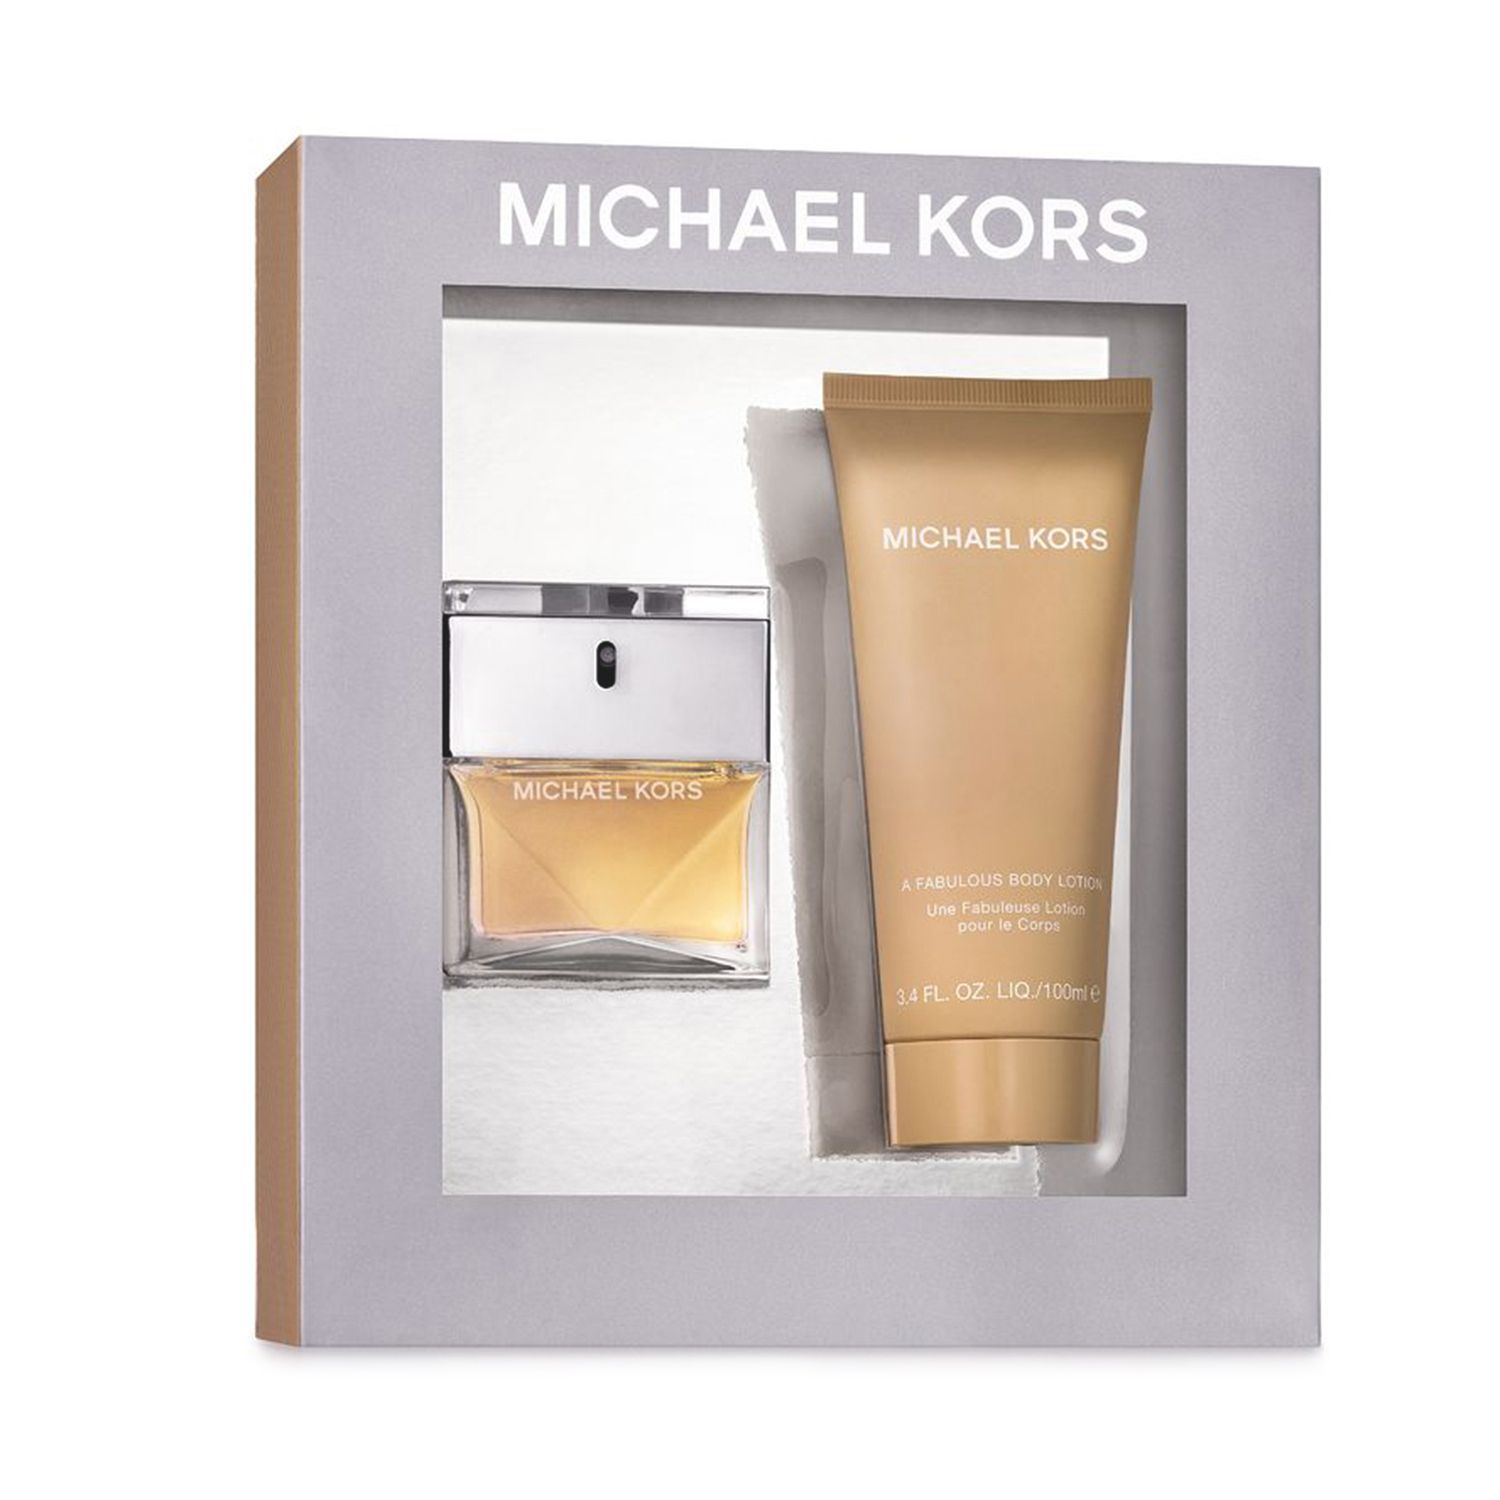 michael kors perfume gift box